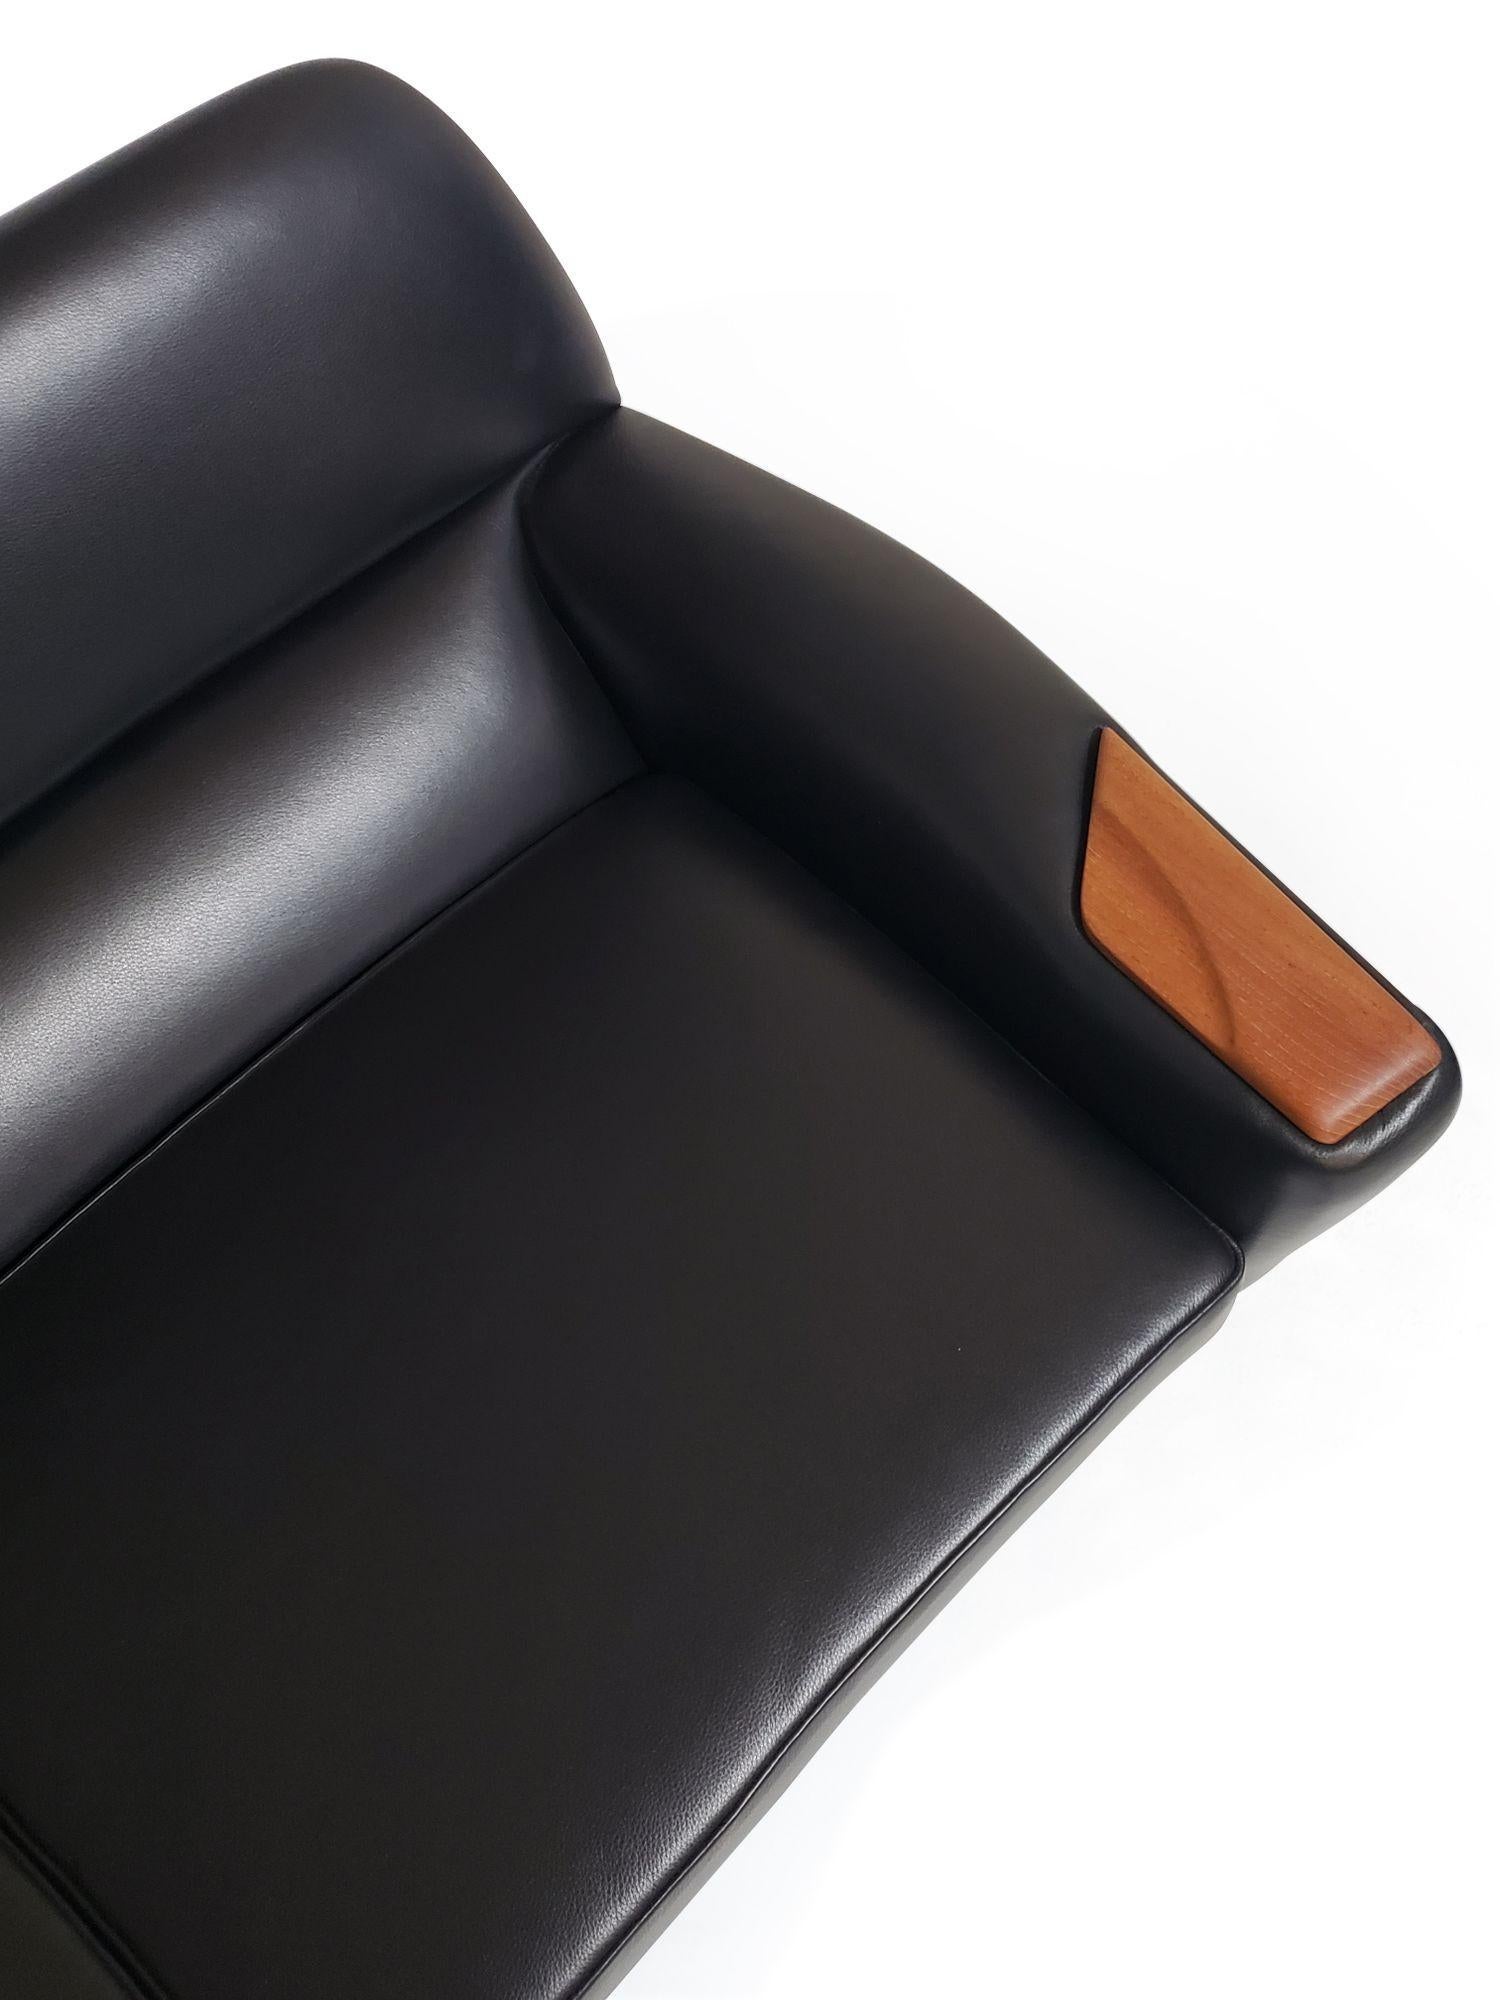 Oiled Leif Hansen Black Leather Mid-Century Danish Sofa